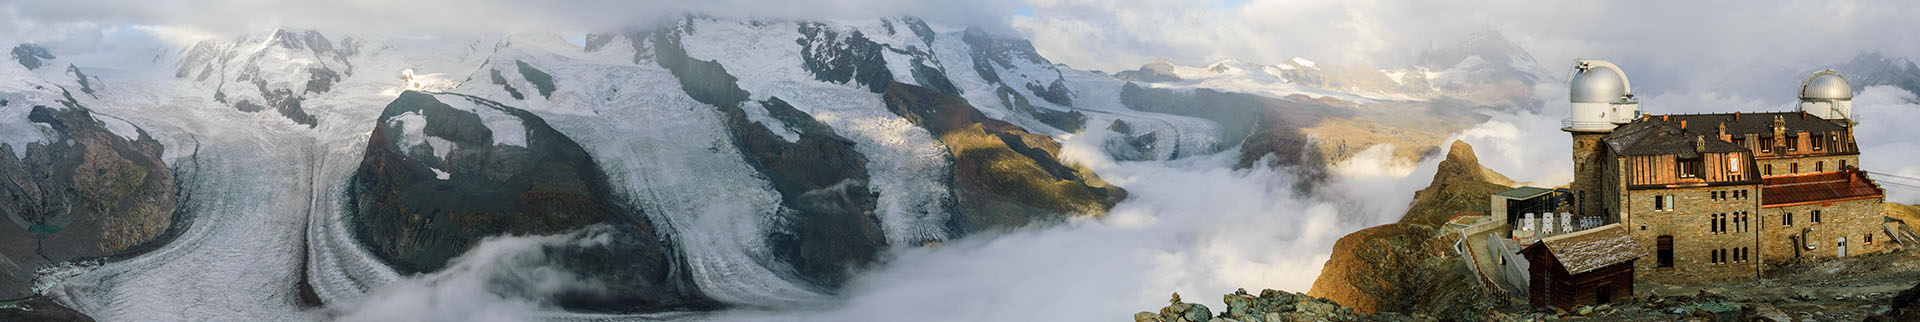 Panorama Kulmhotel Gornergrat met gletsjer